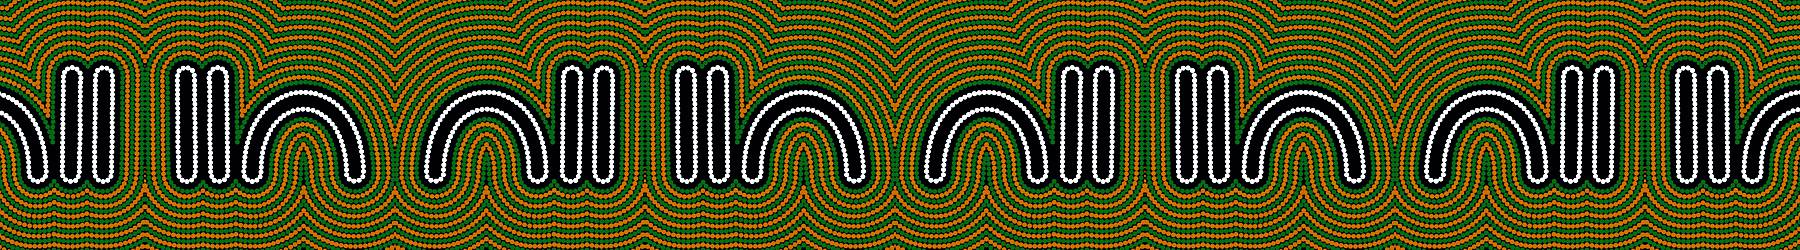 Aboriginal Art Symbols - Man